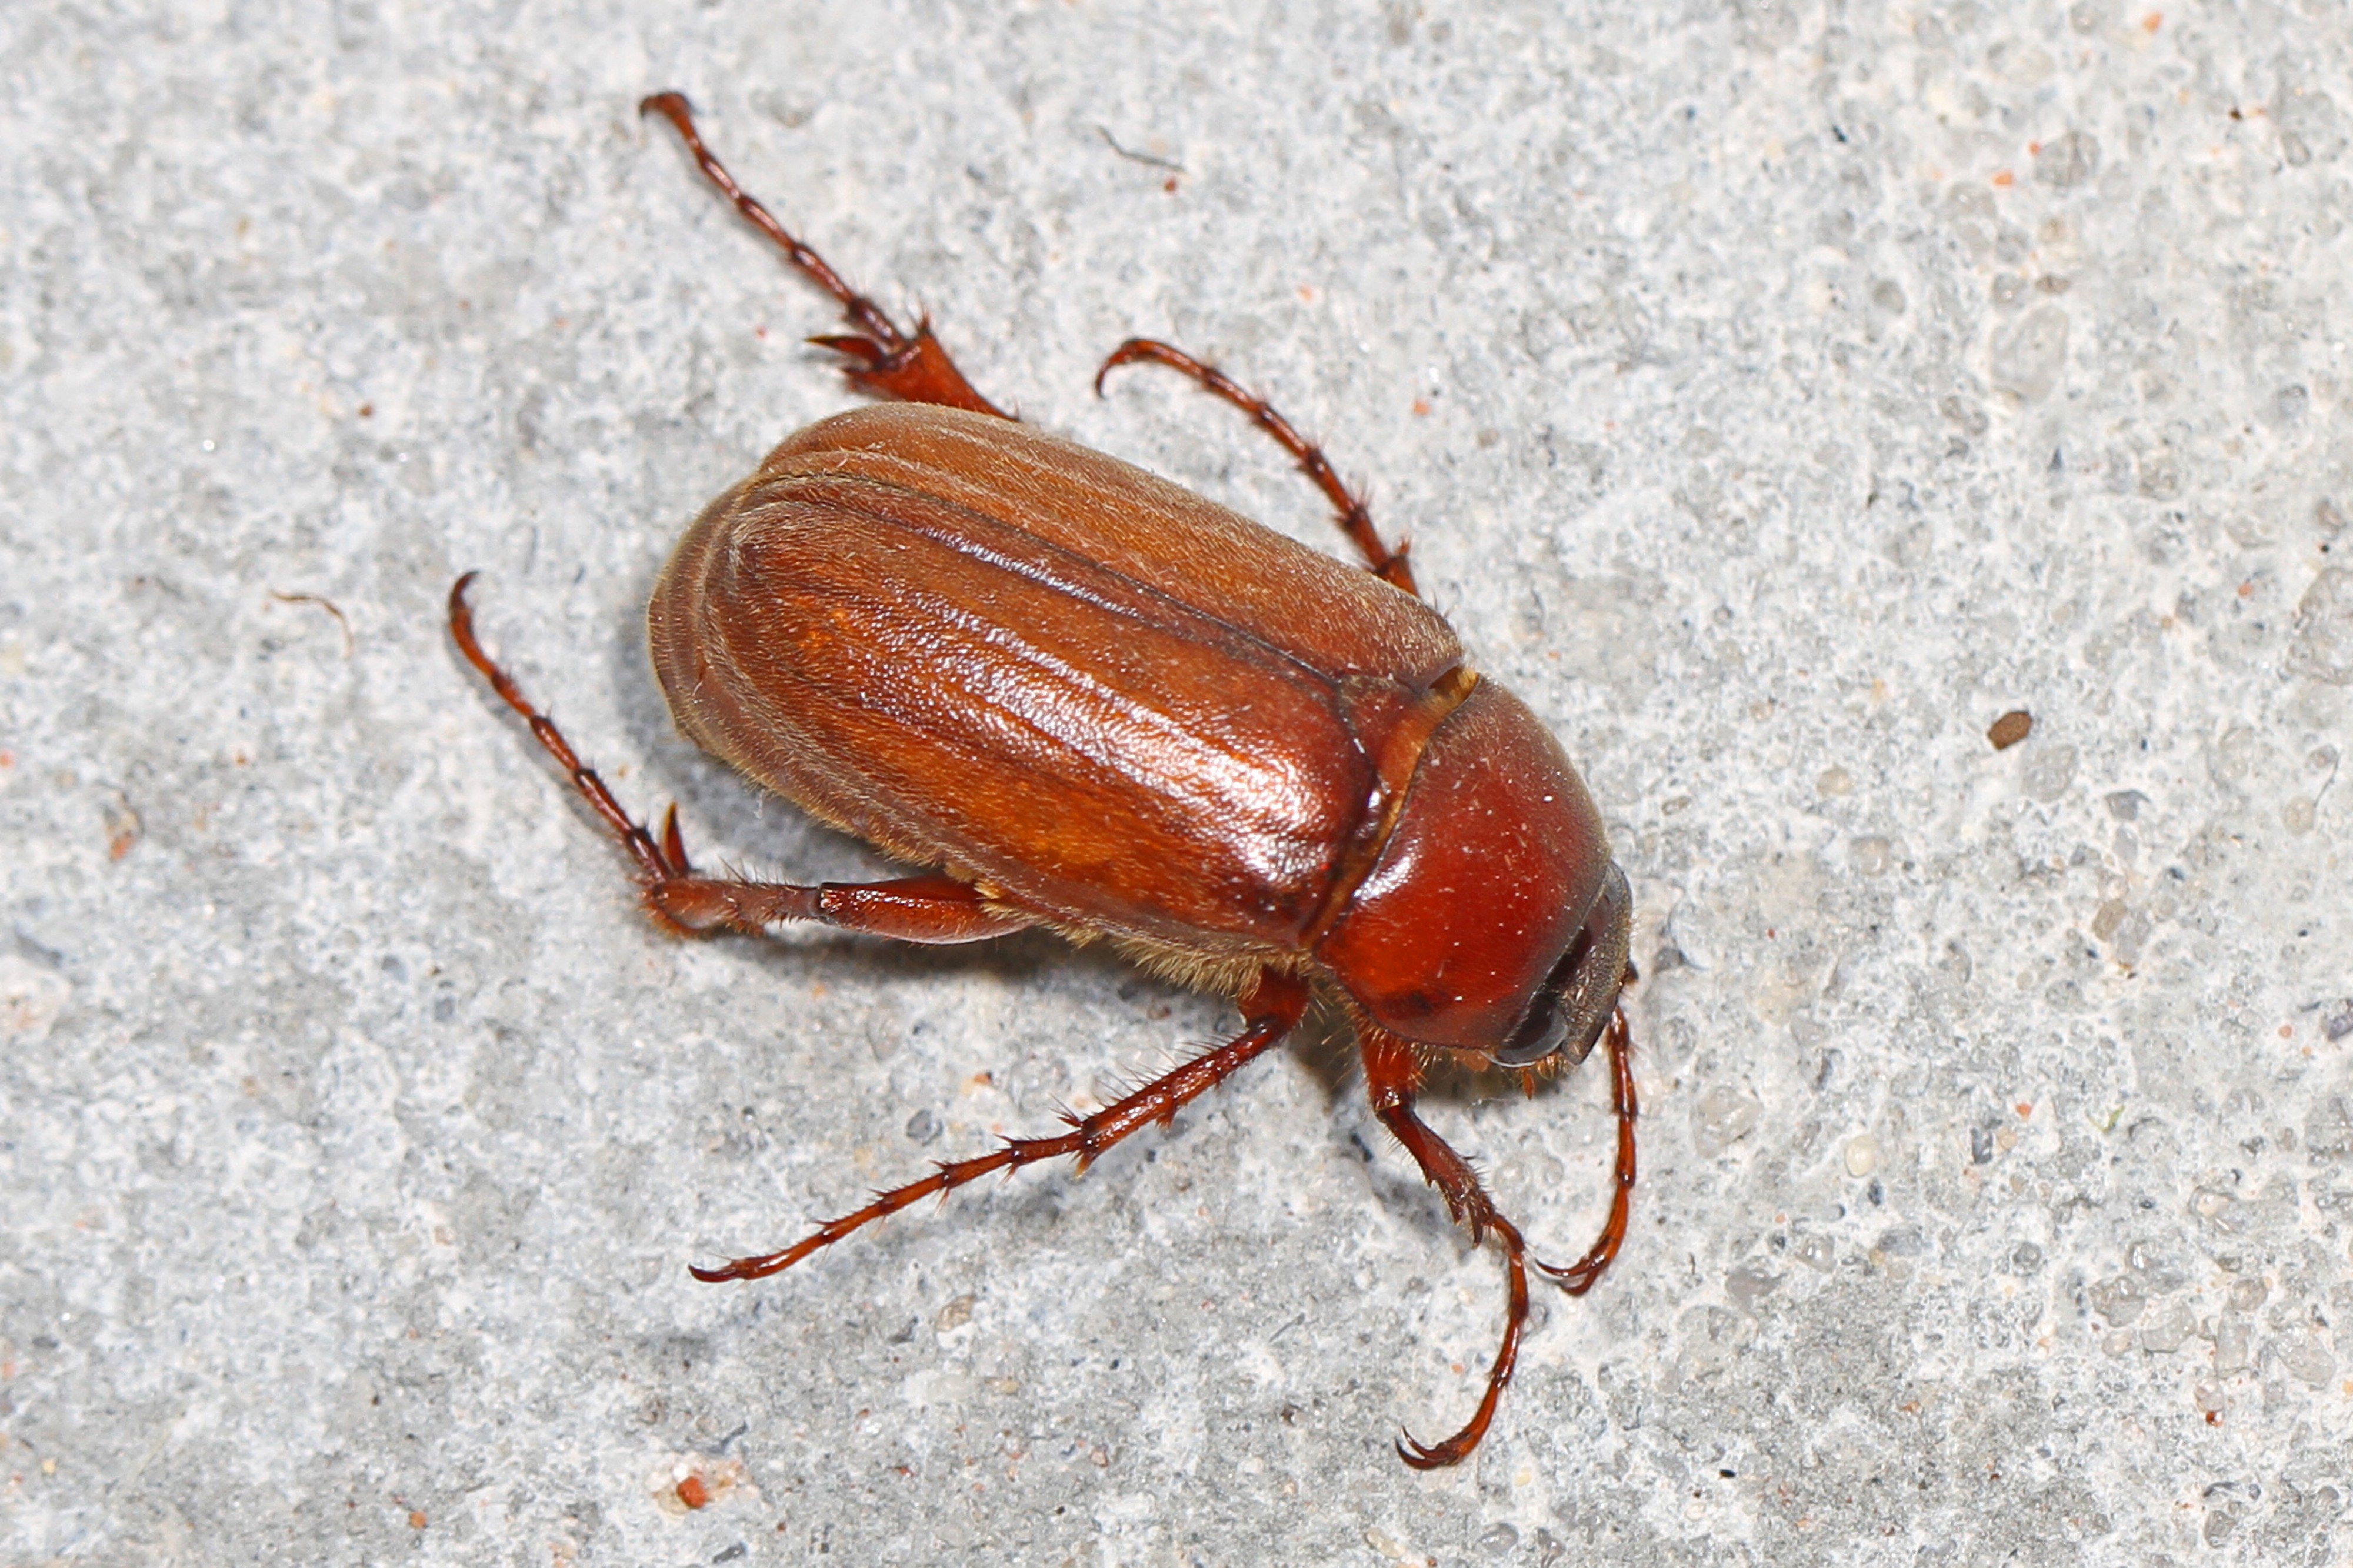 Asiatic Garden Beetle - Maladera castanea, Archbold Biological Station, Venus, Florida